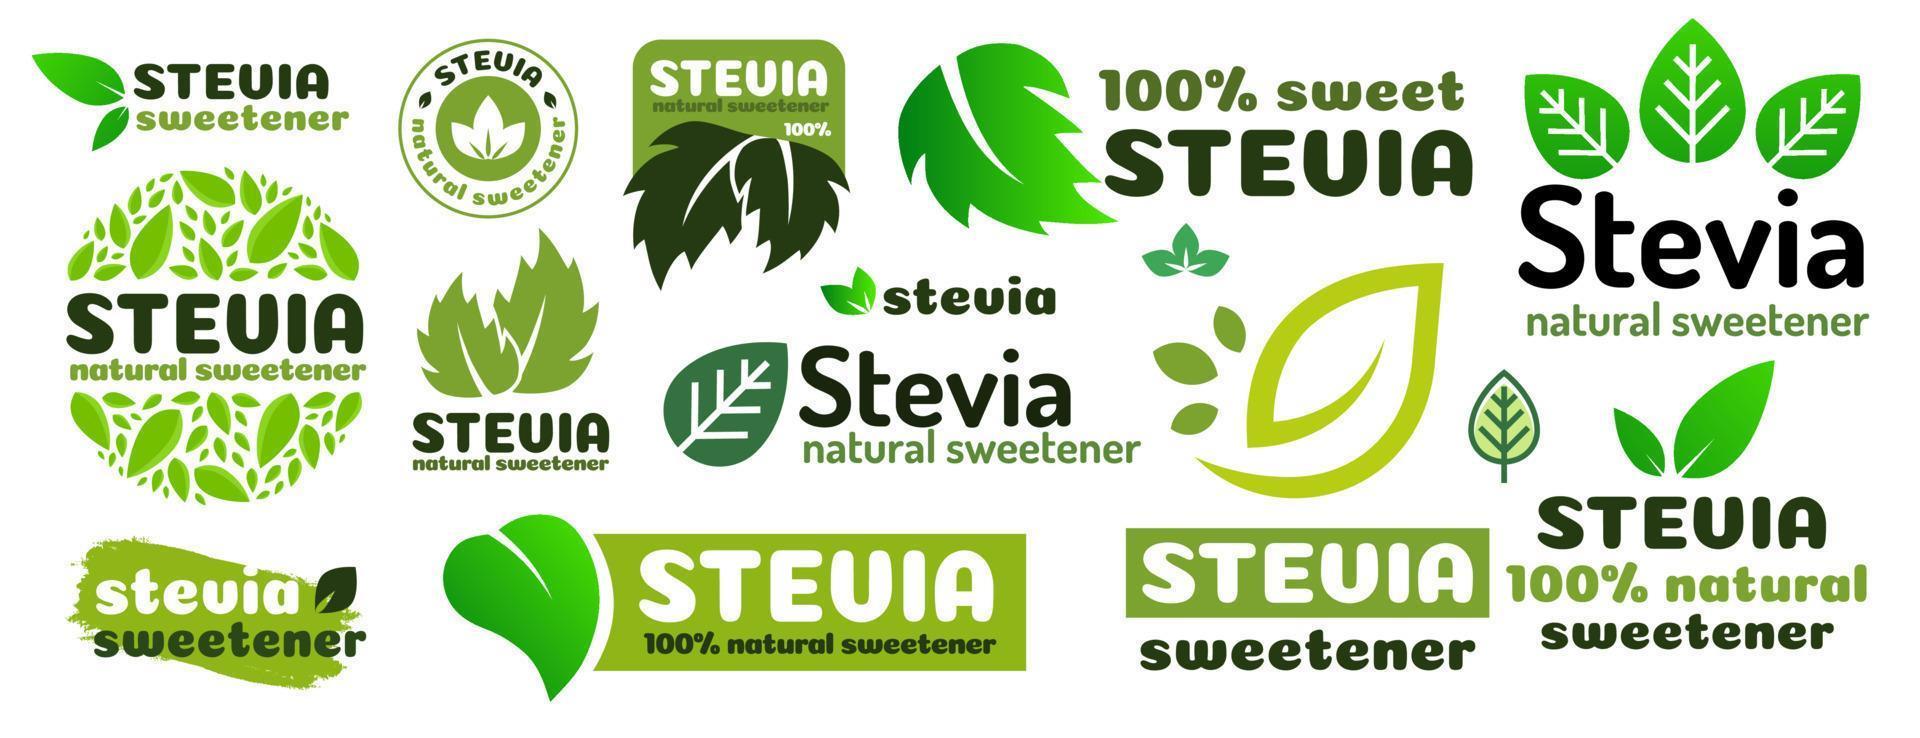 stevia bladeren symbool vector set